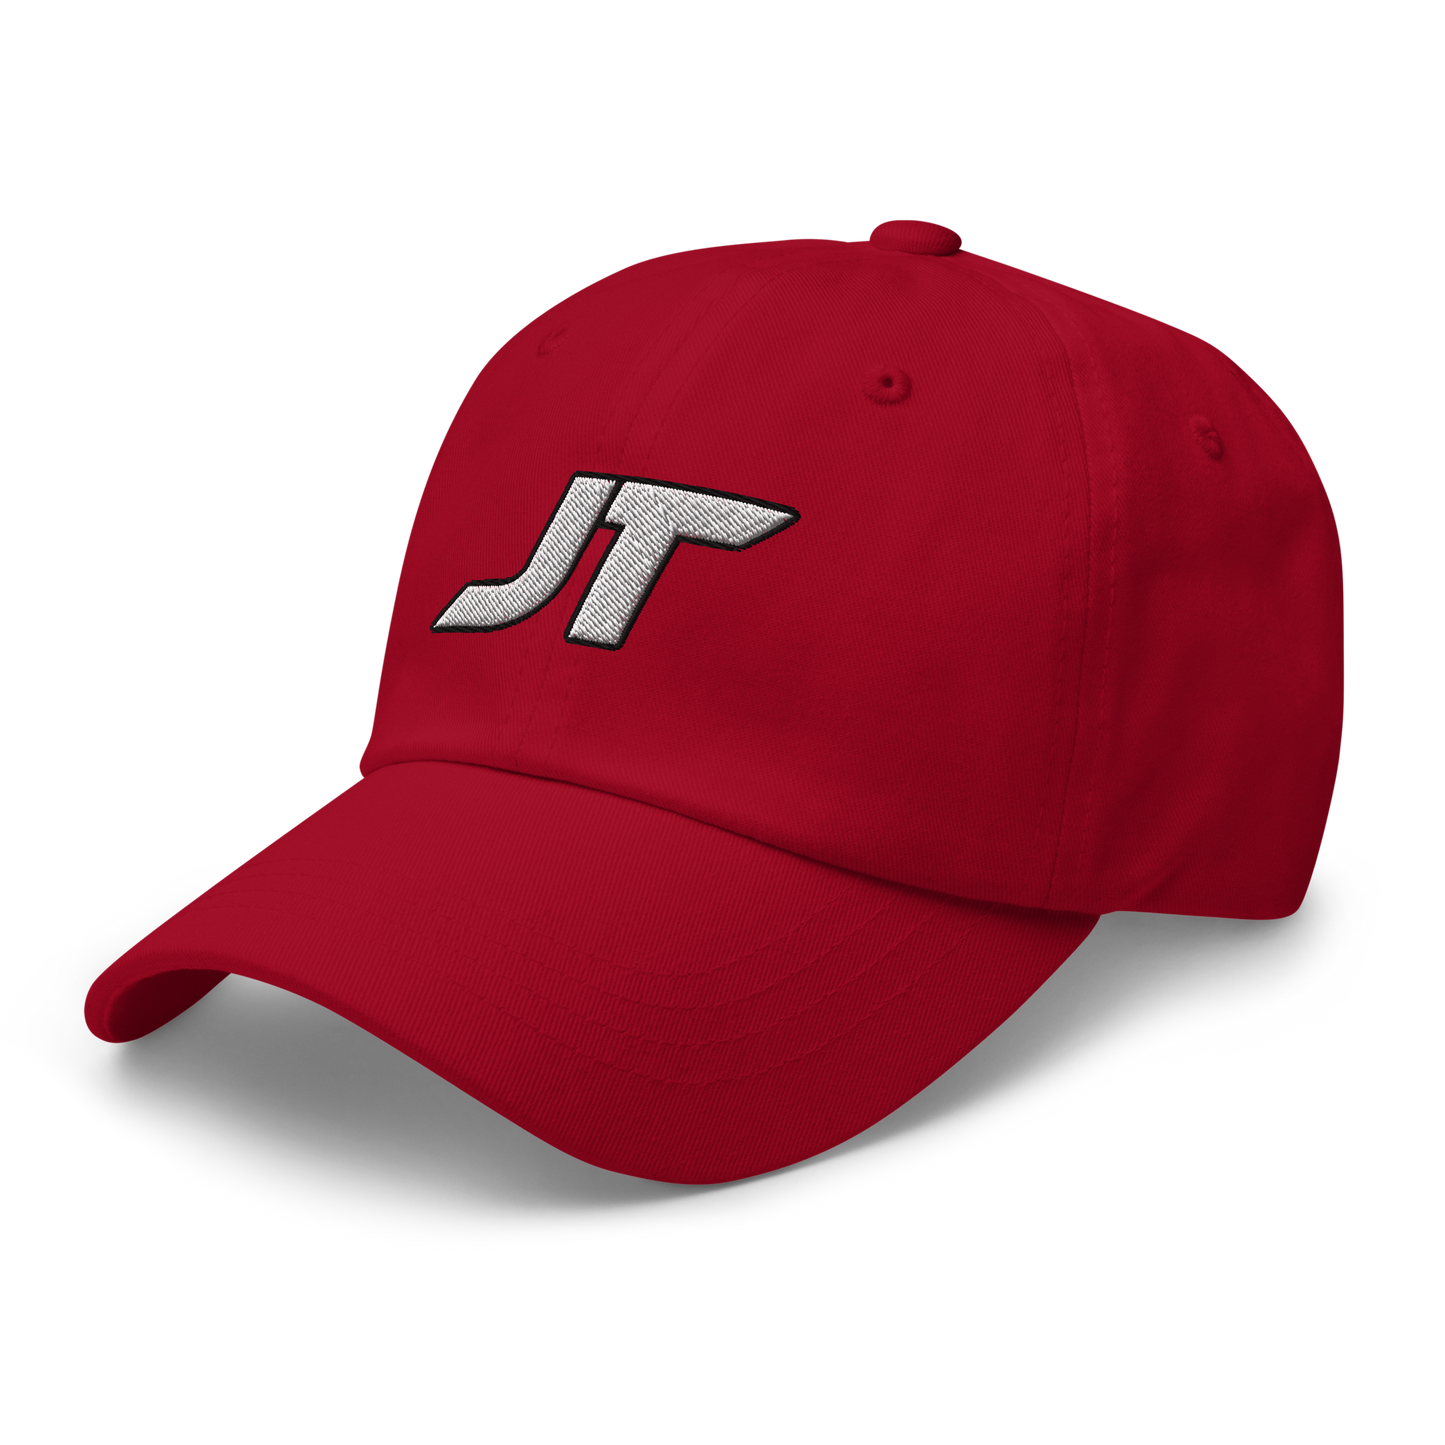 JUSTIN THOMAS PERFORMANCE CAP